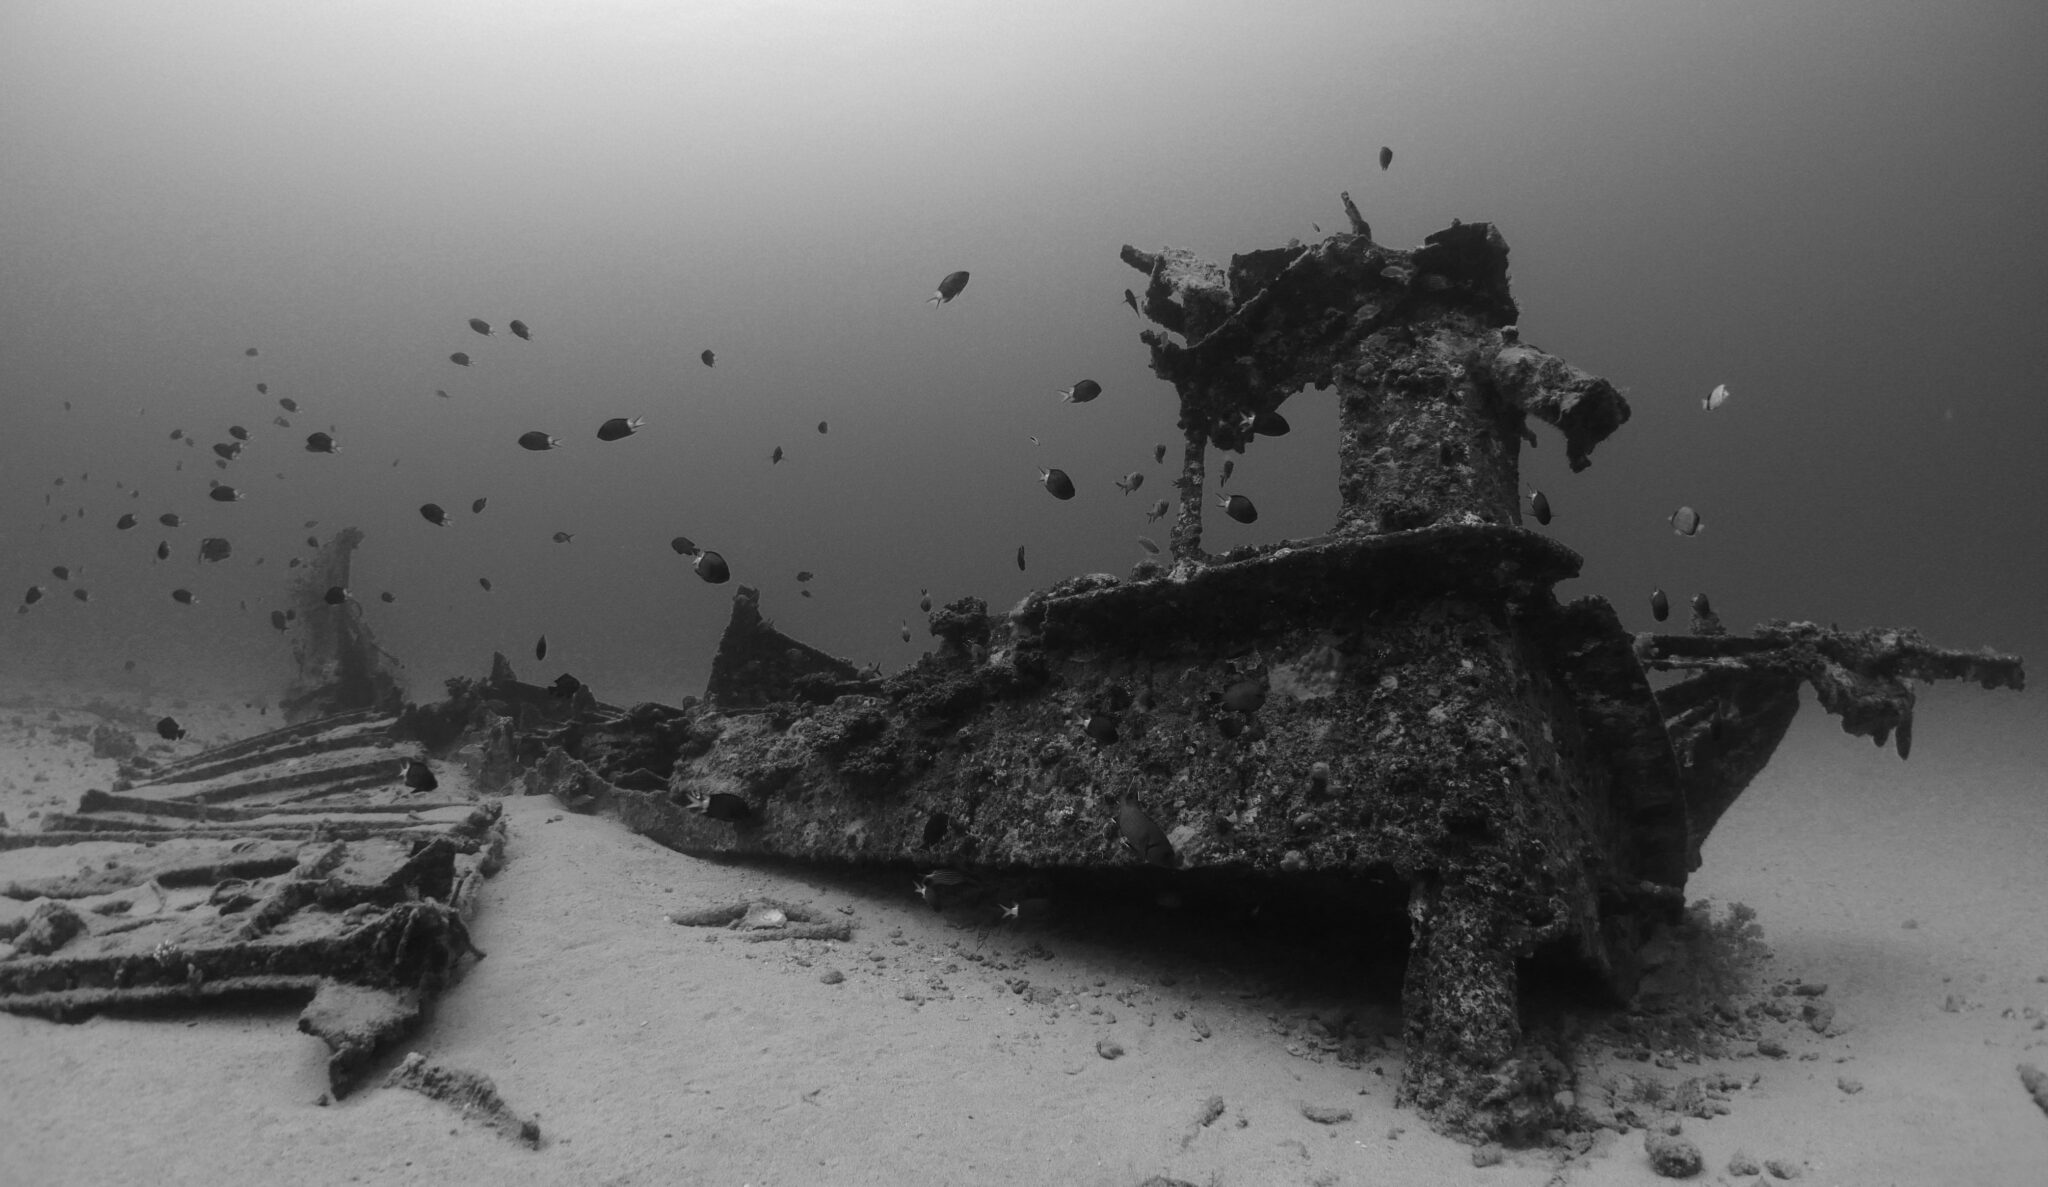 Mauritius wreck diving